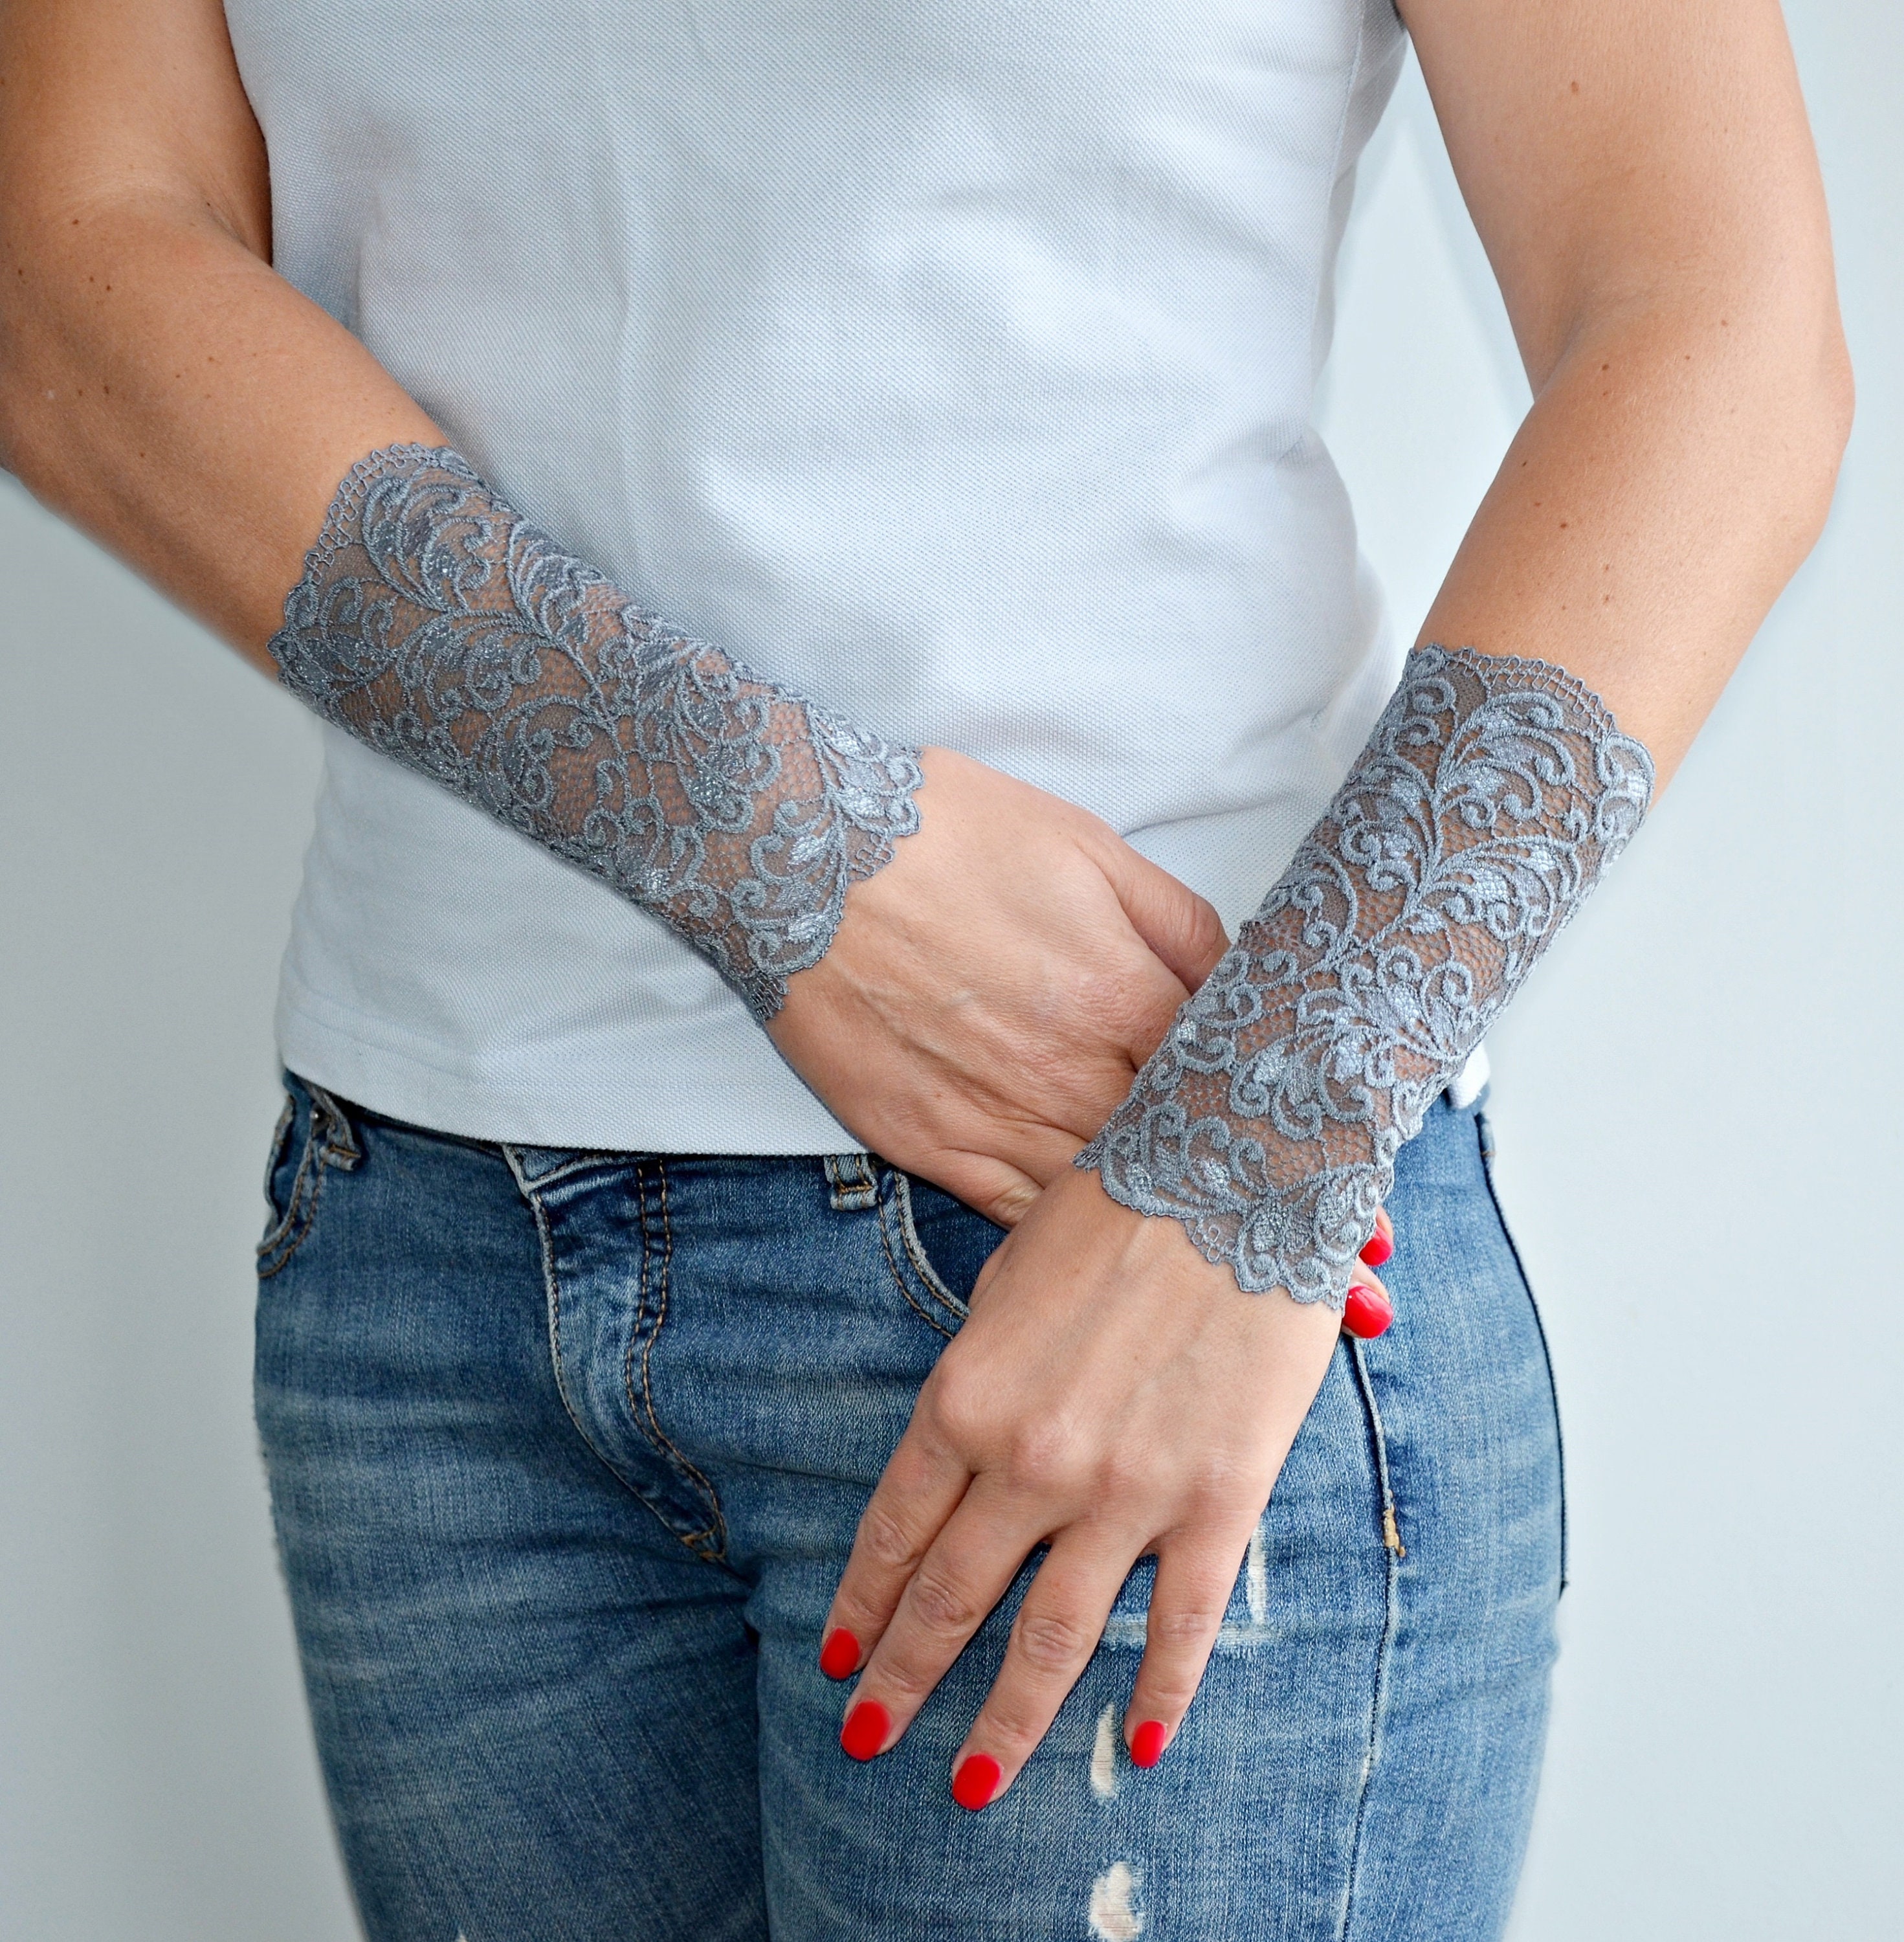 5 amazing forearm Mandala tattoo design digital download – TattooDesignStock